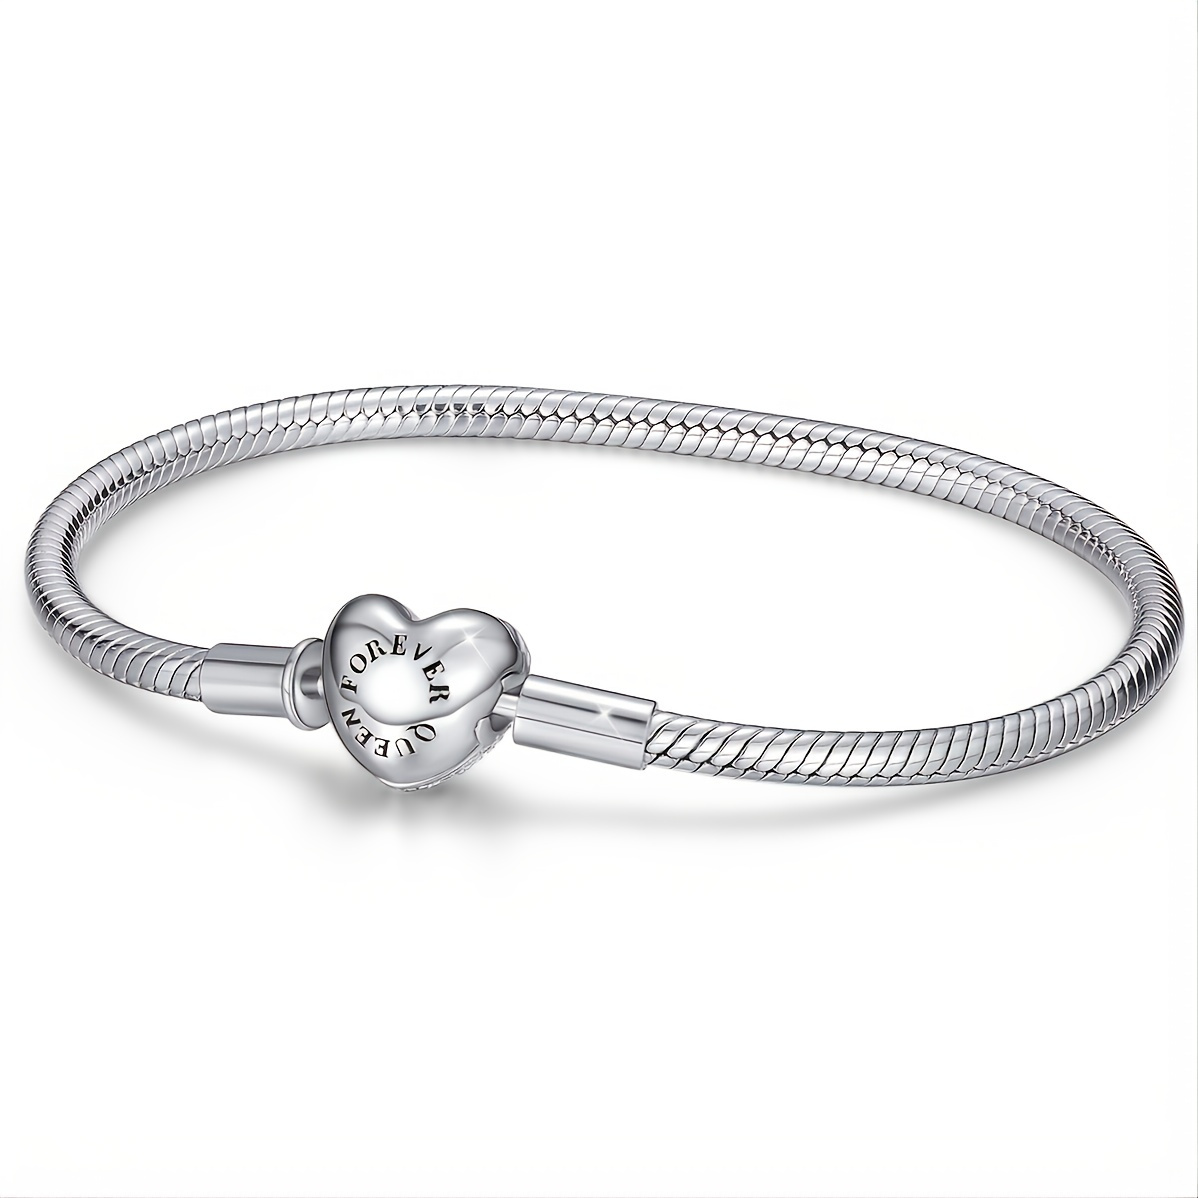 Women Bracelets 925 Sterling Silver Heart CZ Diamond Snake Chain Bracelet  Fit Pandora Charm Beads Fine Jewelry Gift With Original Box From  Silver925factory, $17.37